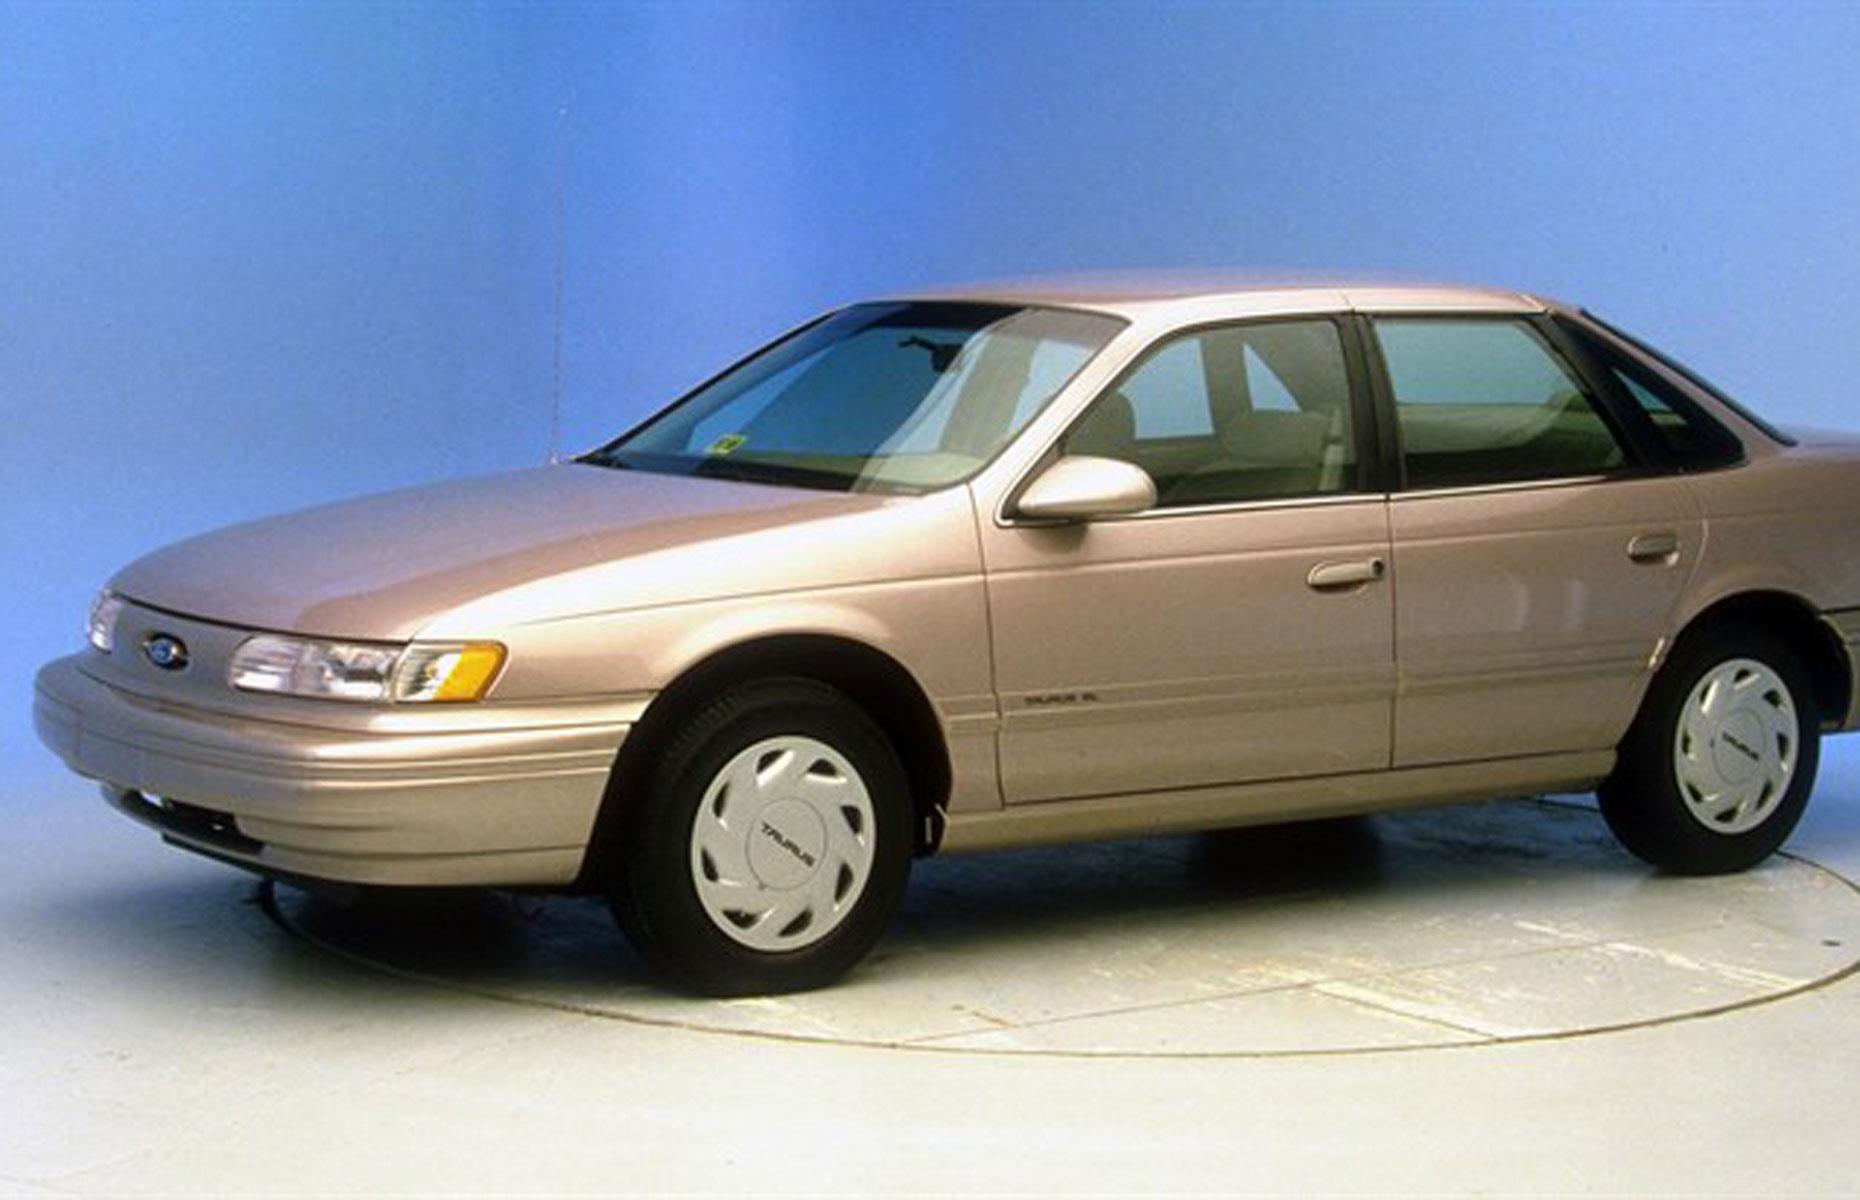 1990s: Ford Taurus